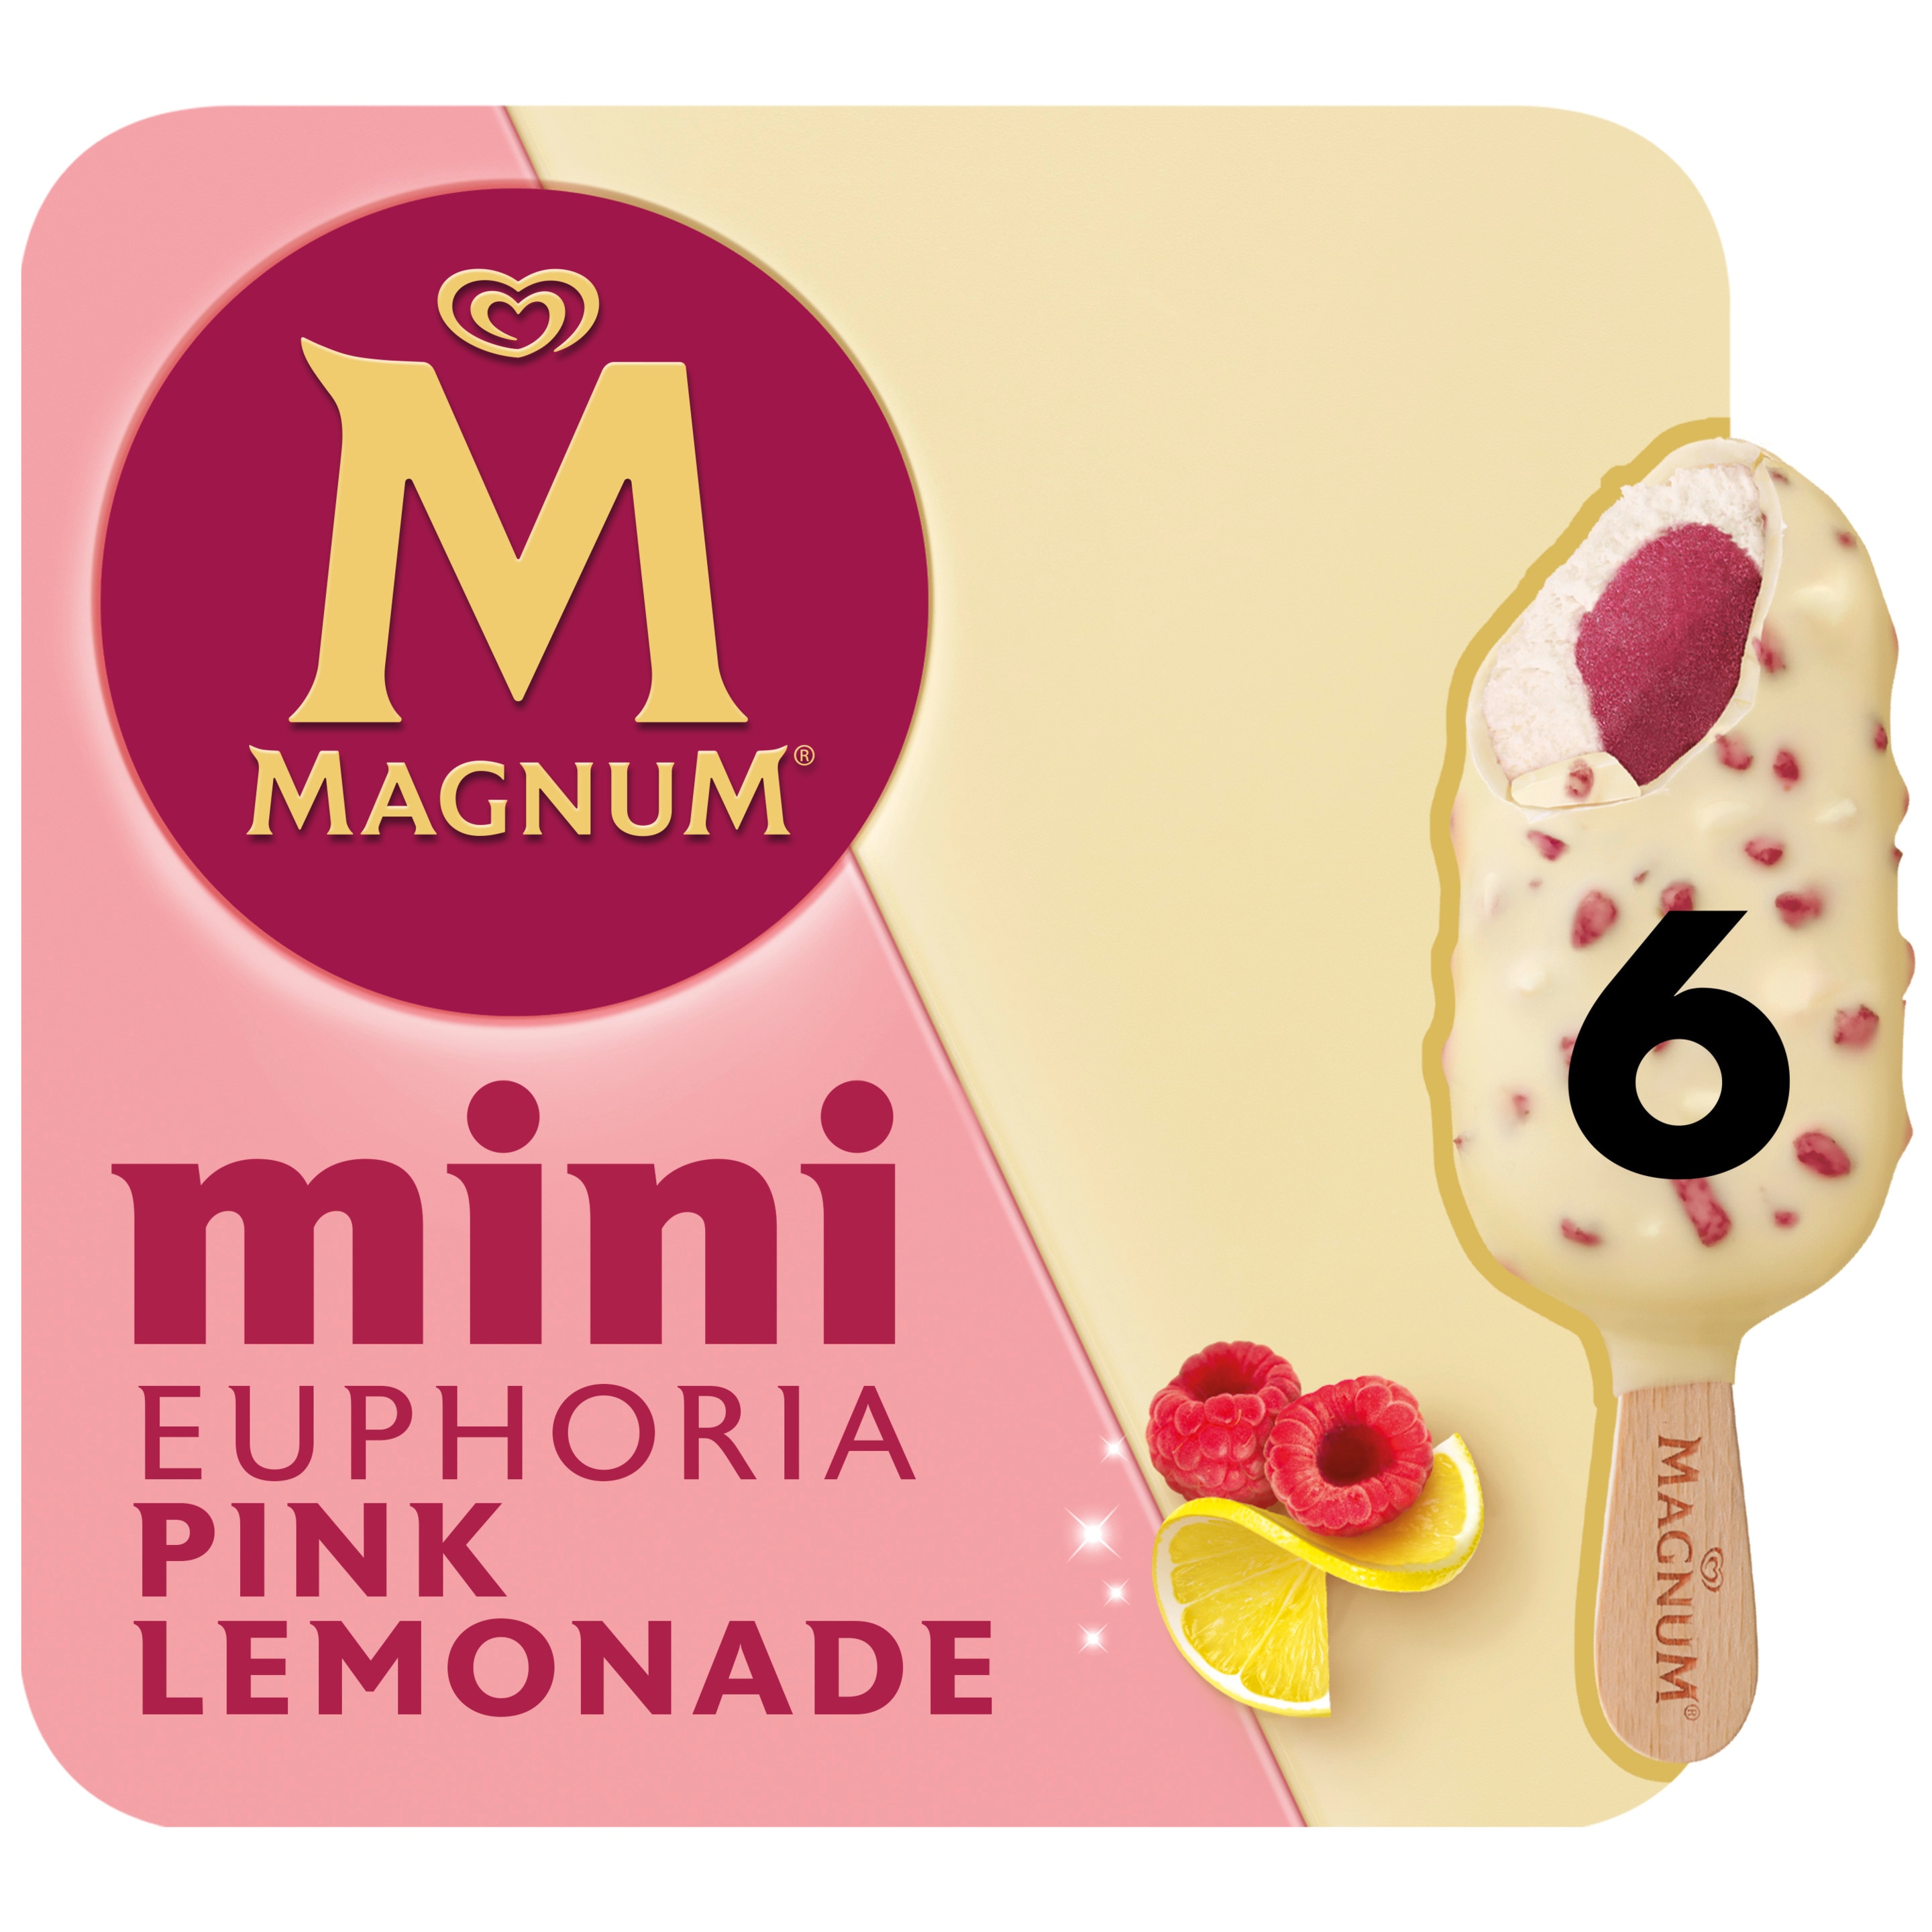 Magnum Mini Euphoria Pink Lemonade 6 x 55 ml - Magnum Schweiz